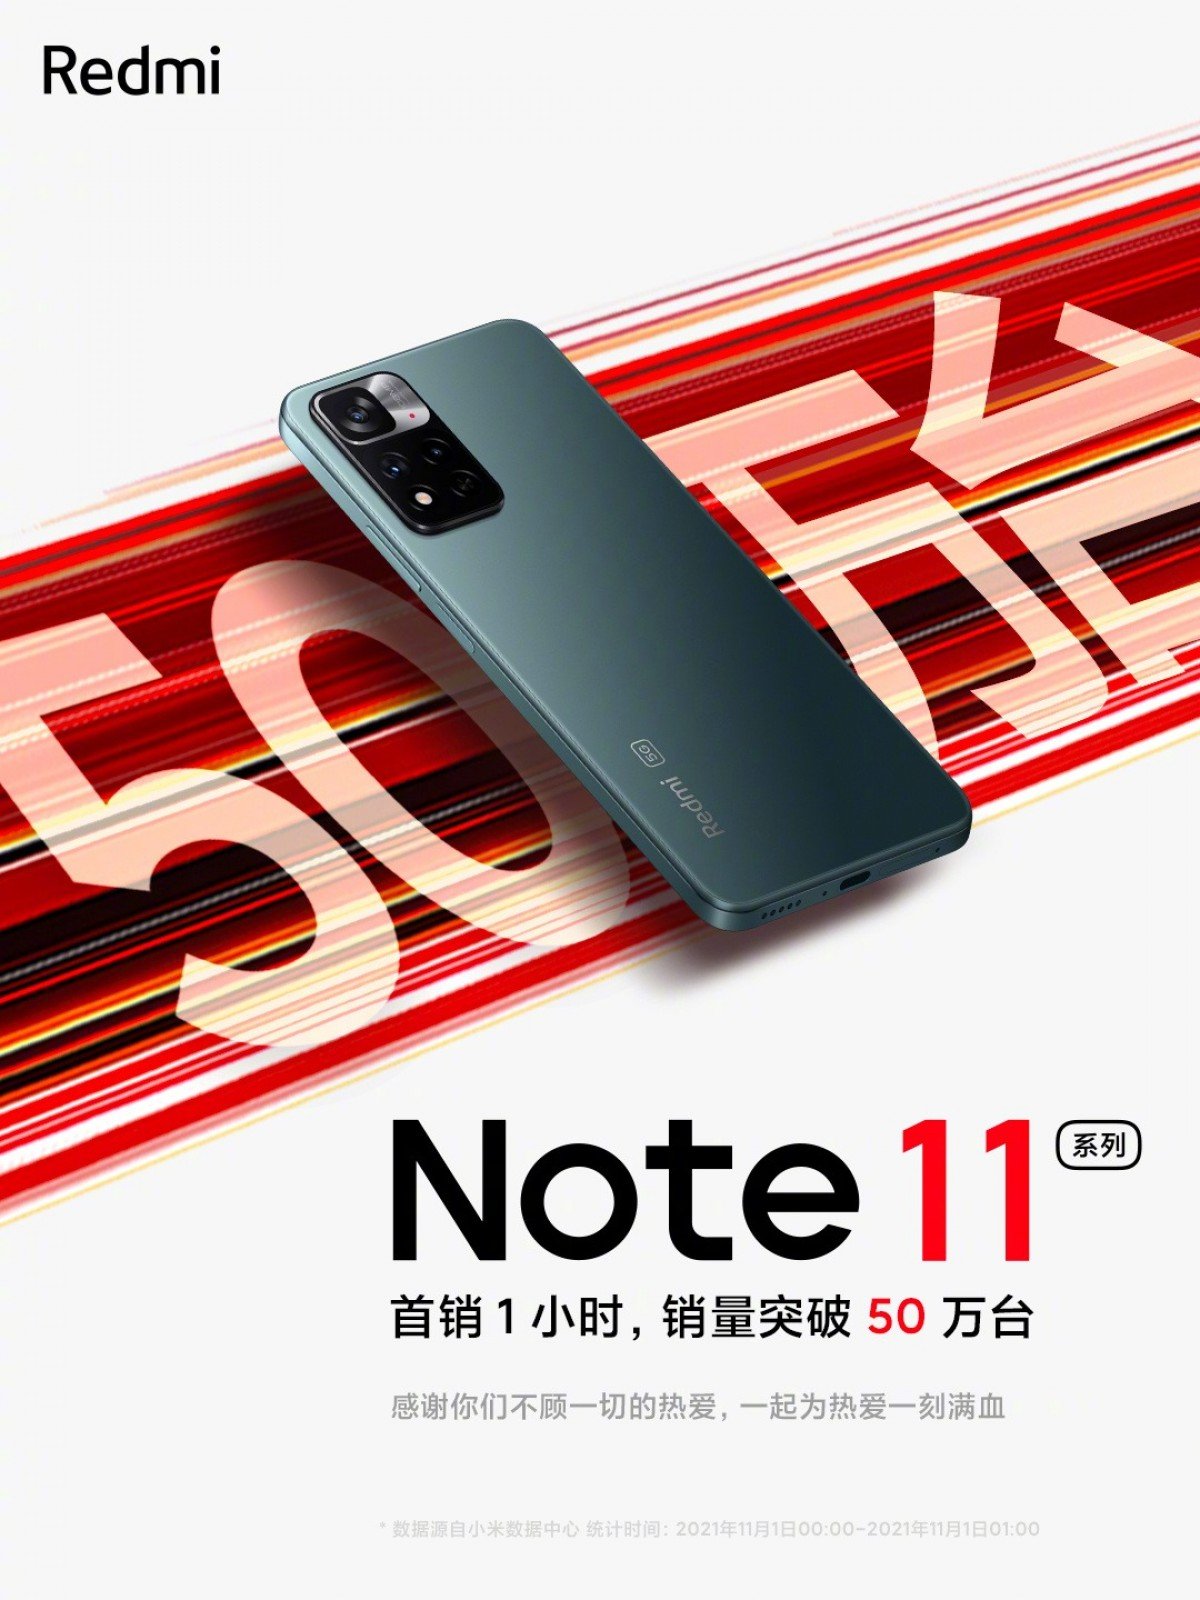 Xiaomi เปิดขาย Remi Note 11 ได้ถึง 500000 เครื่อง ใน 1 ชั่วโมง